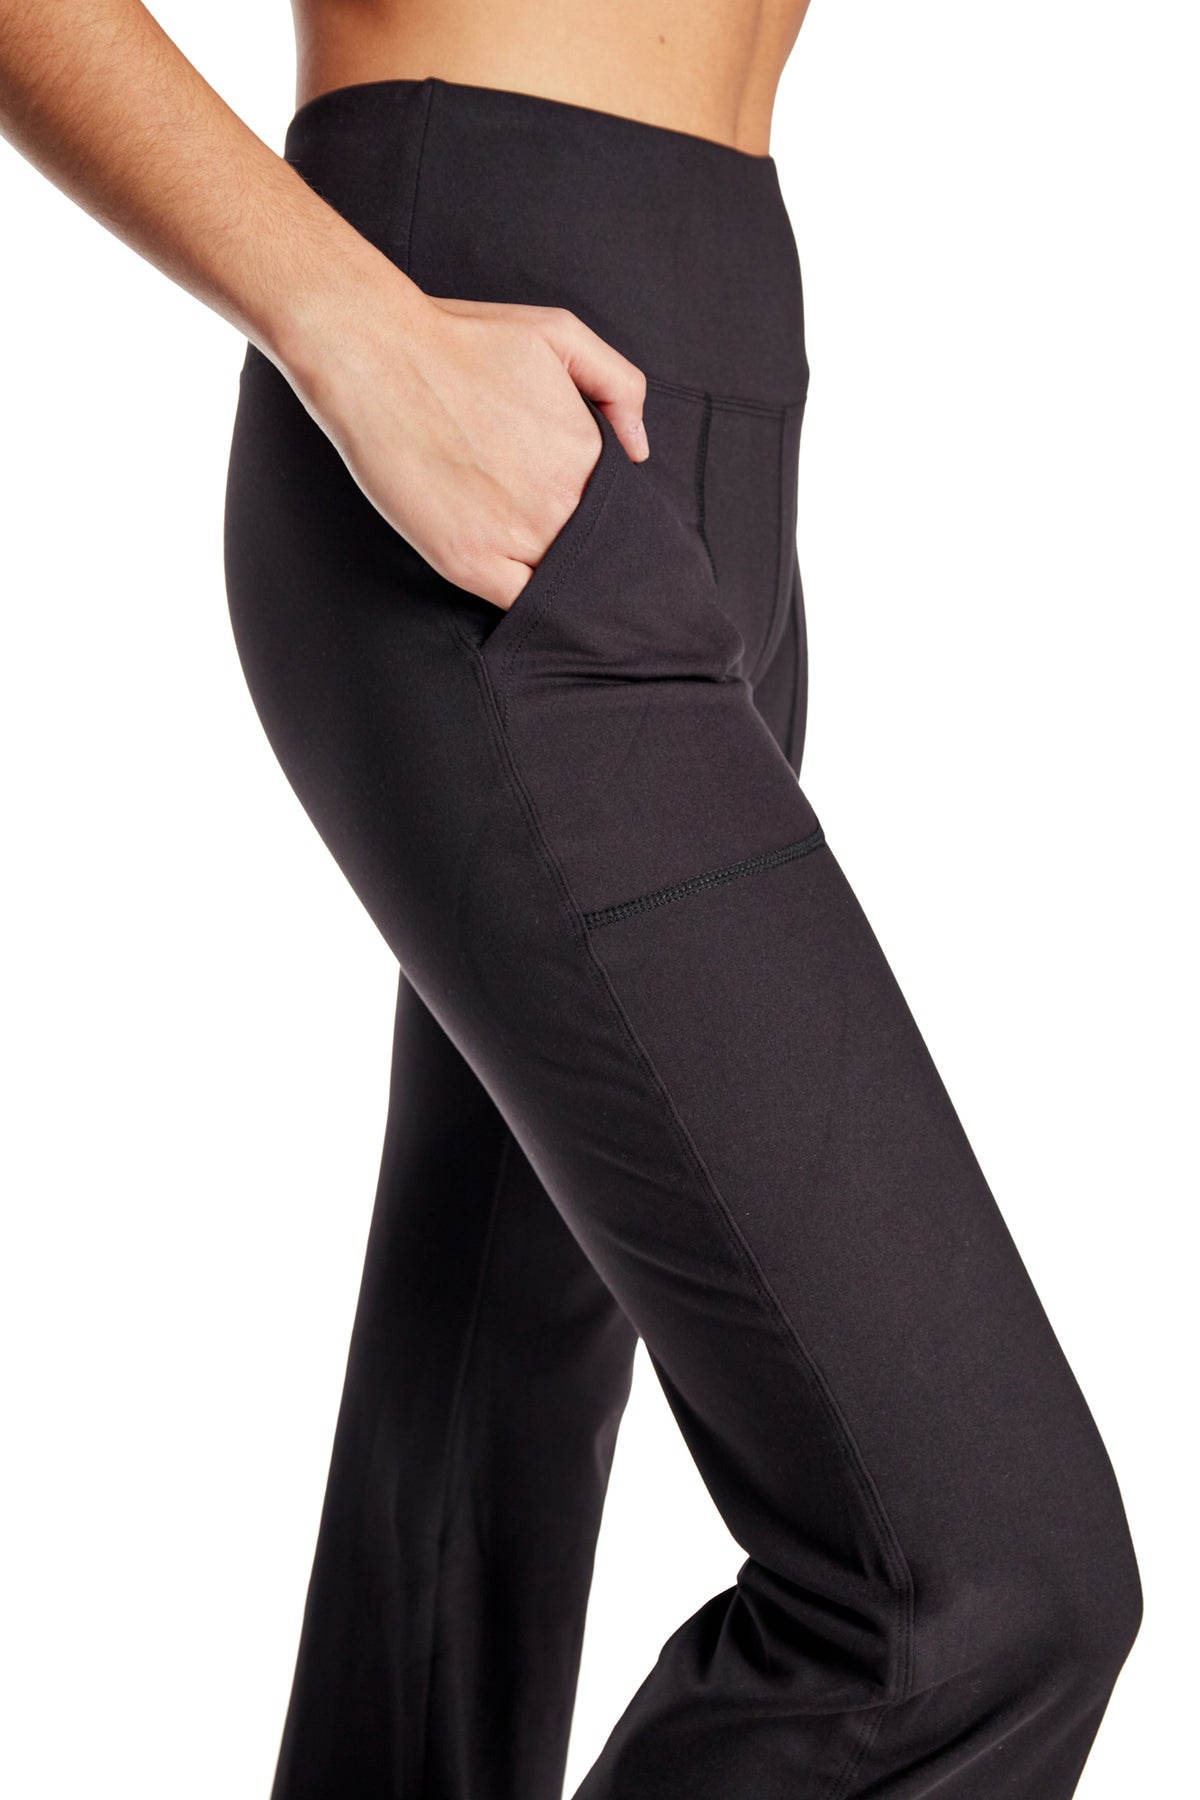  GMIFUN Flared Workout Yoga Pants Leggings for Women